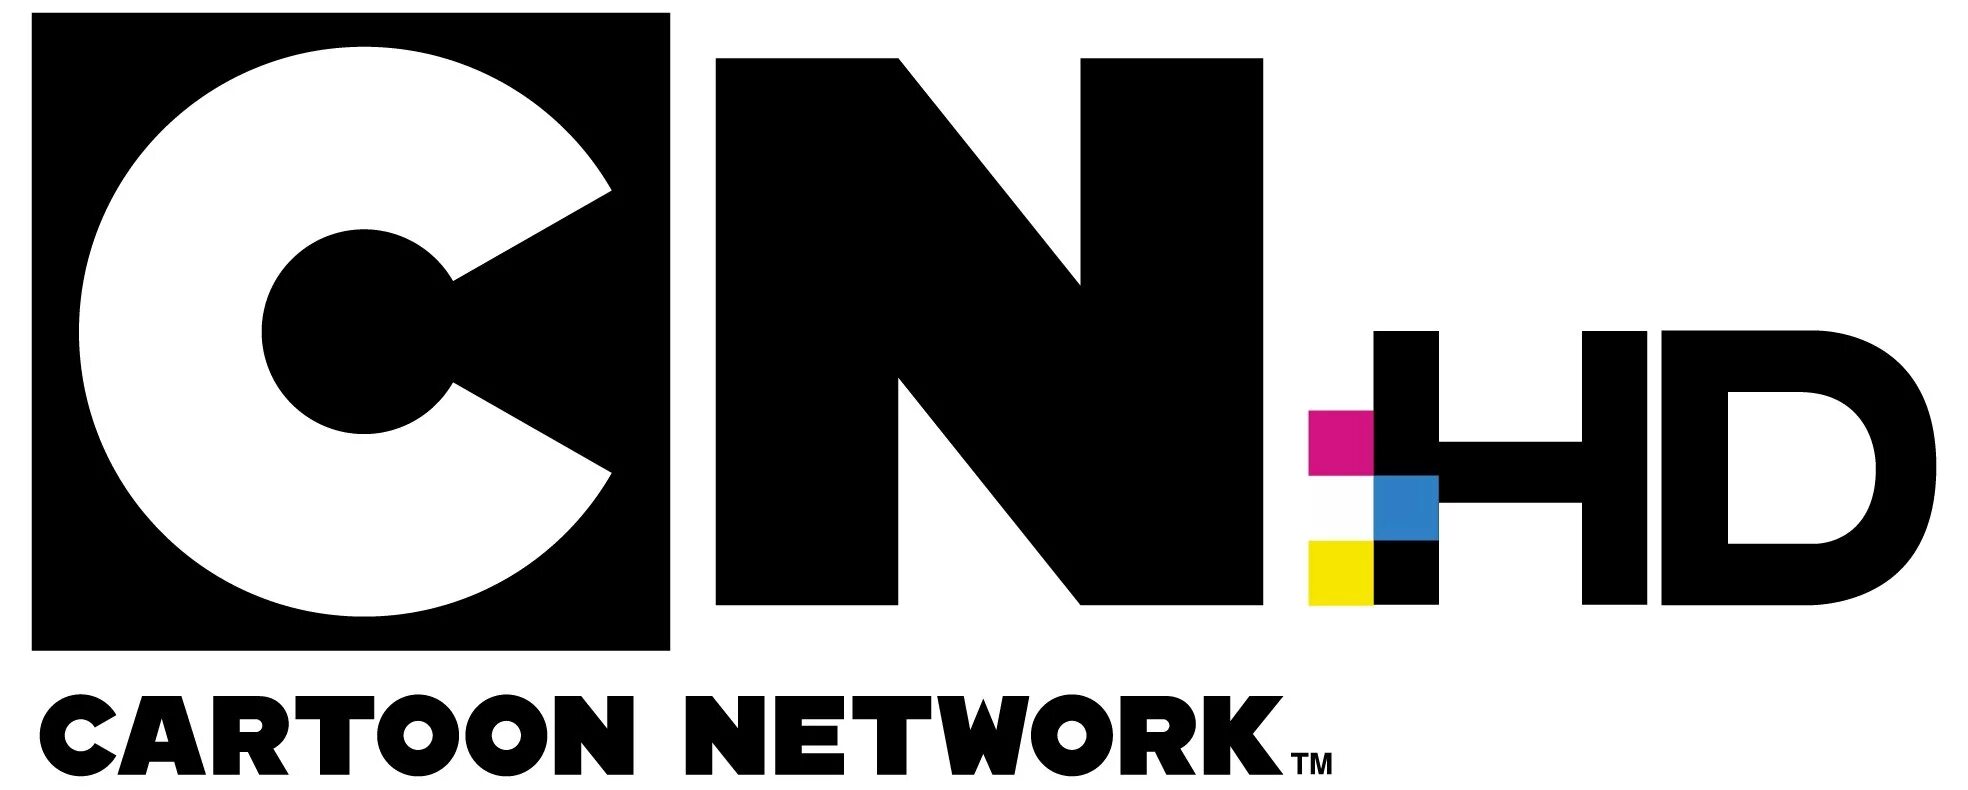 Cartoon network türkiye. Канал Картун нетворк. CN логотип.